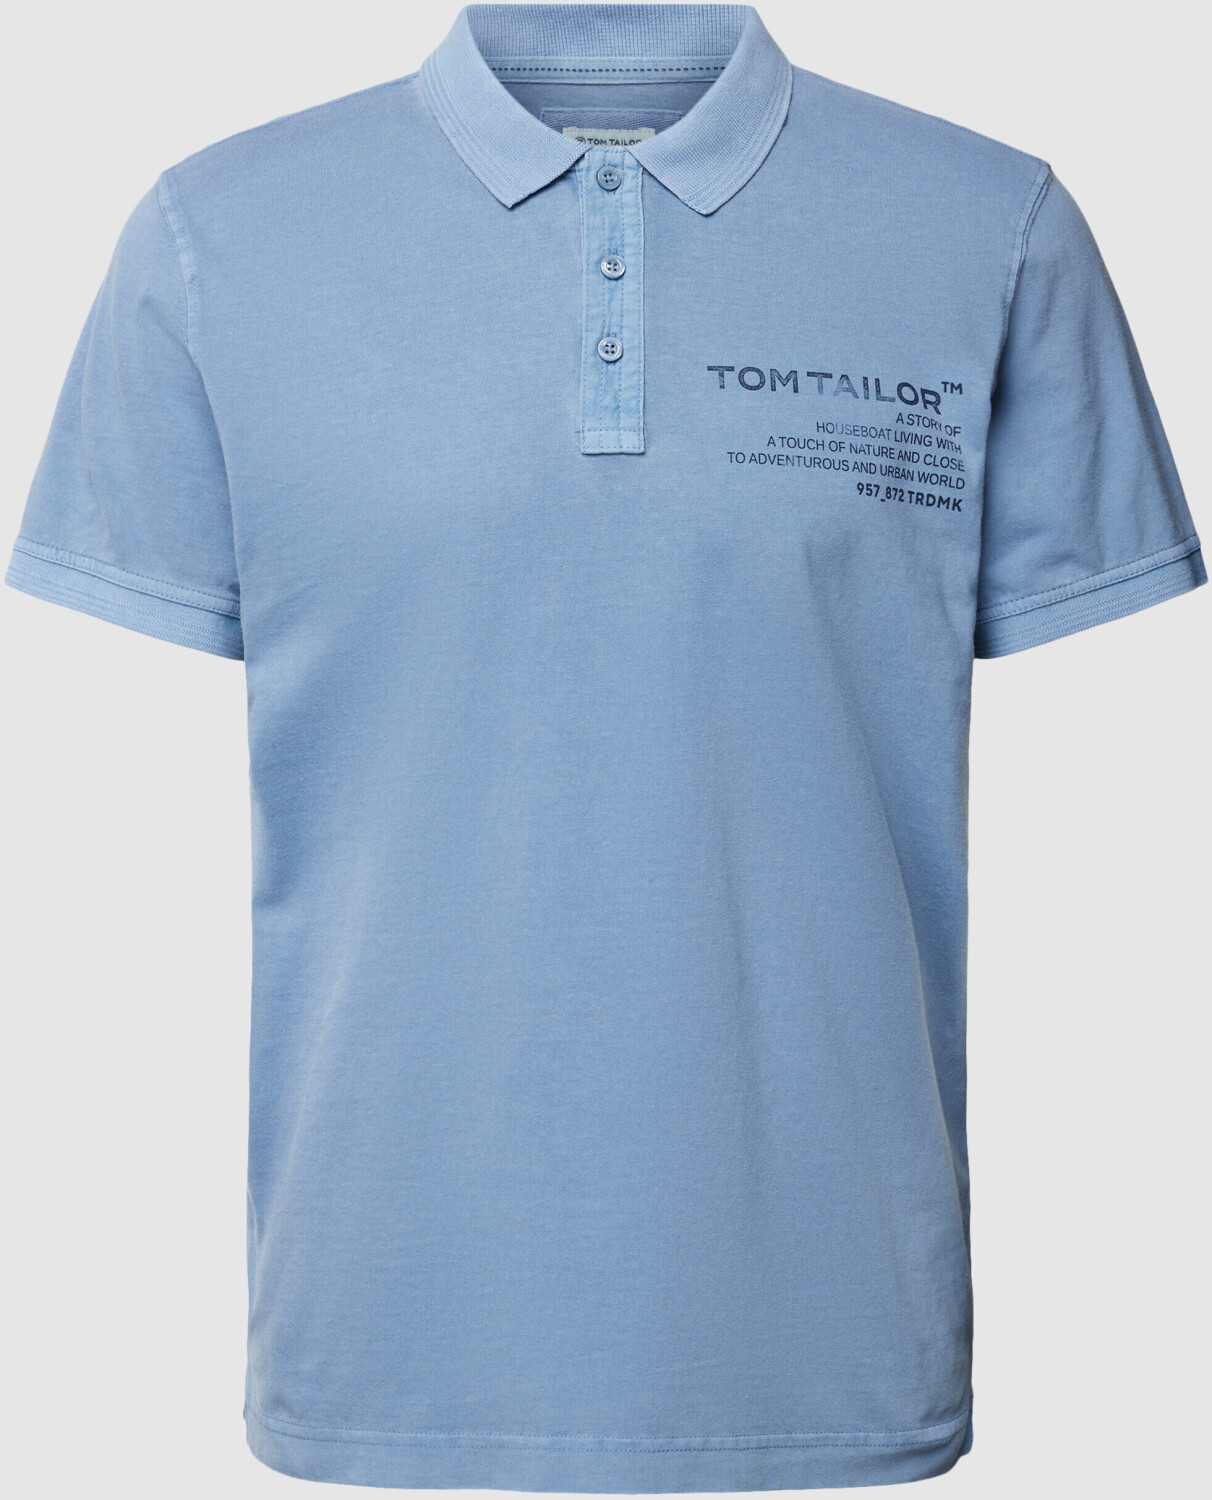 Tom Tailor Poloshirt mit Label-Print (1035641) hellblau ab 7,73 € |  Preisvergleich bei